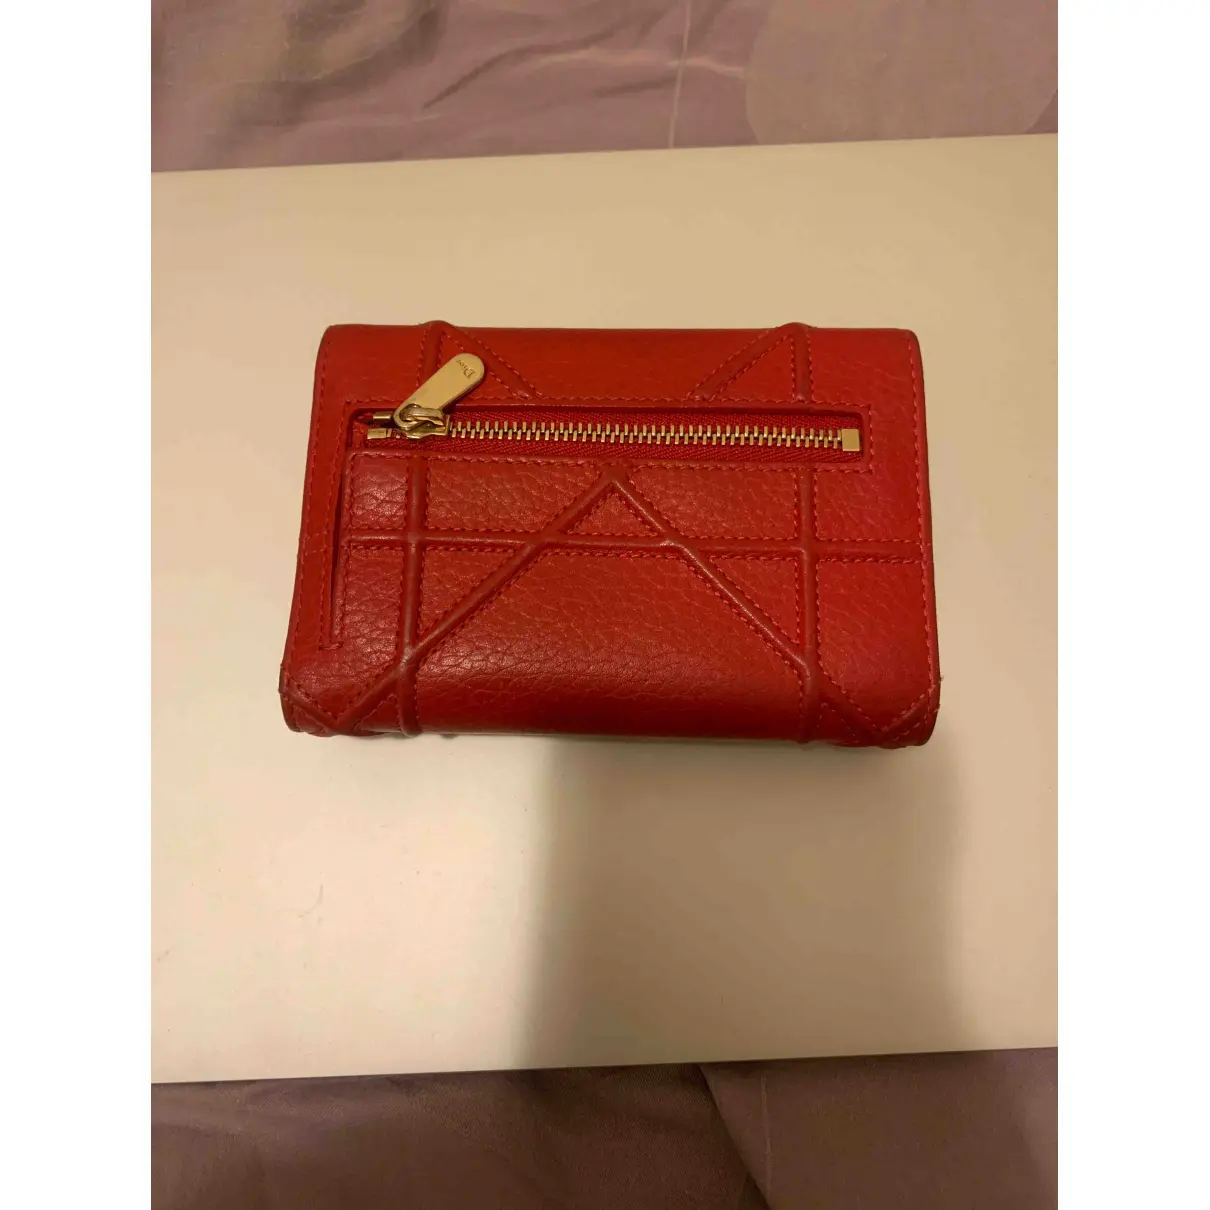 Buy Dior Diorama leather wallet online